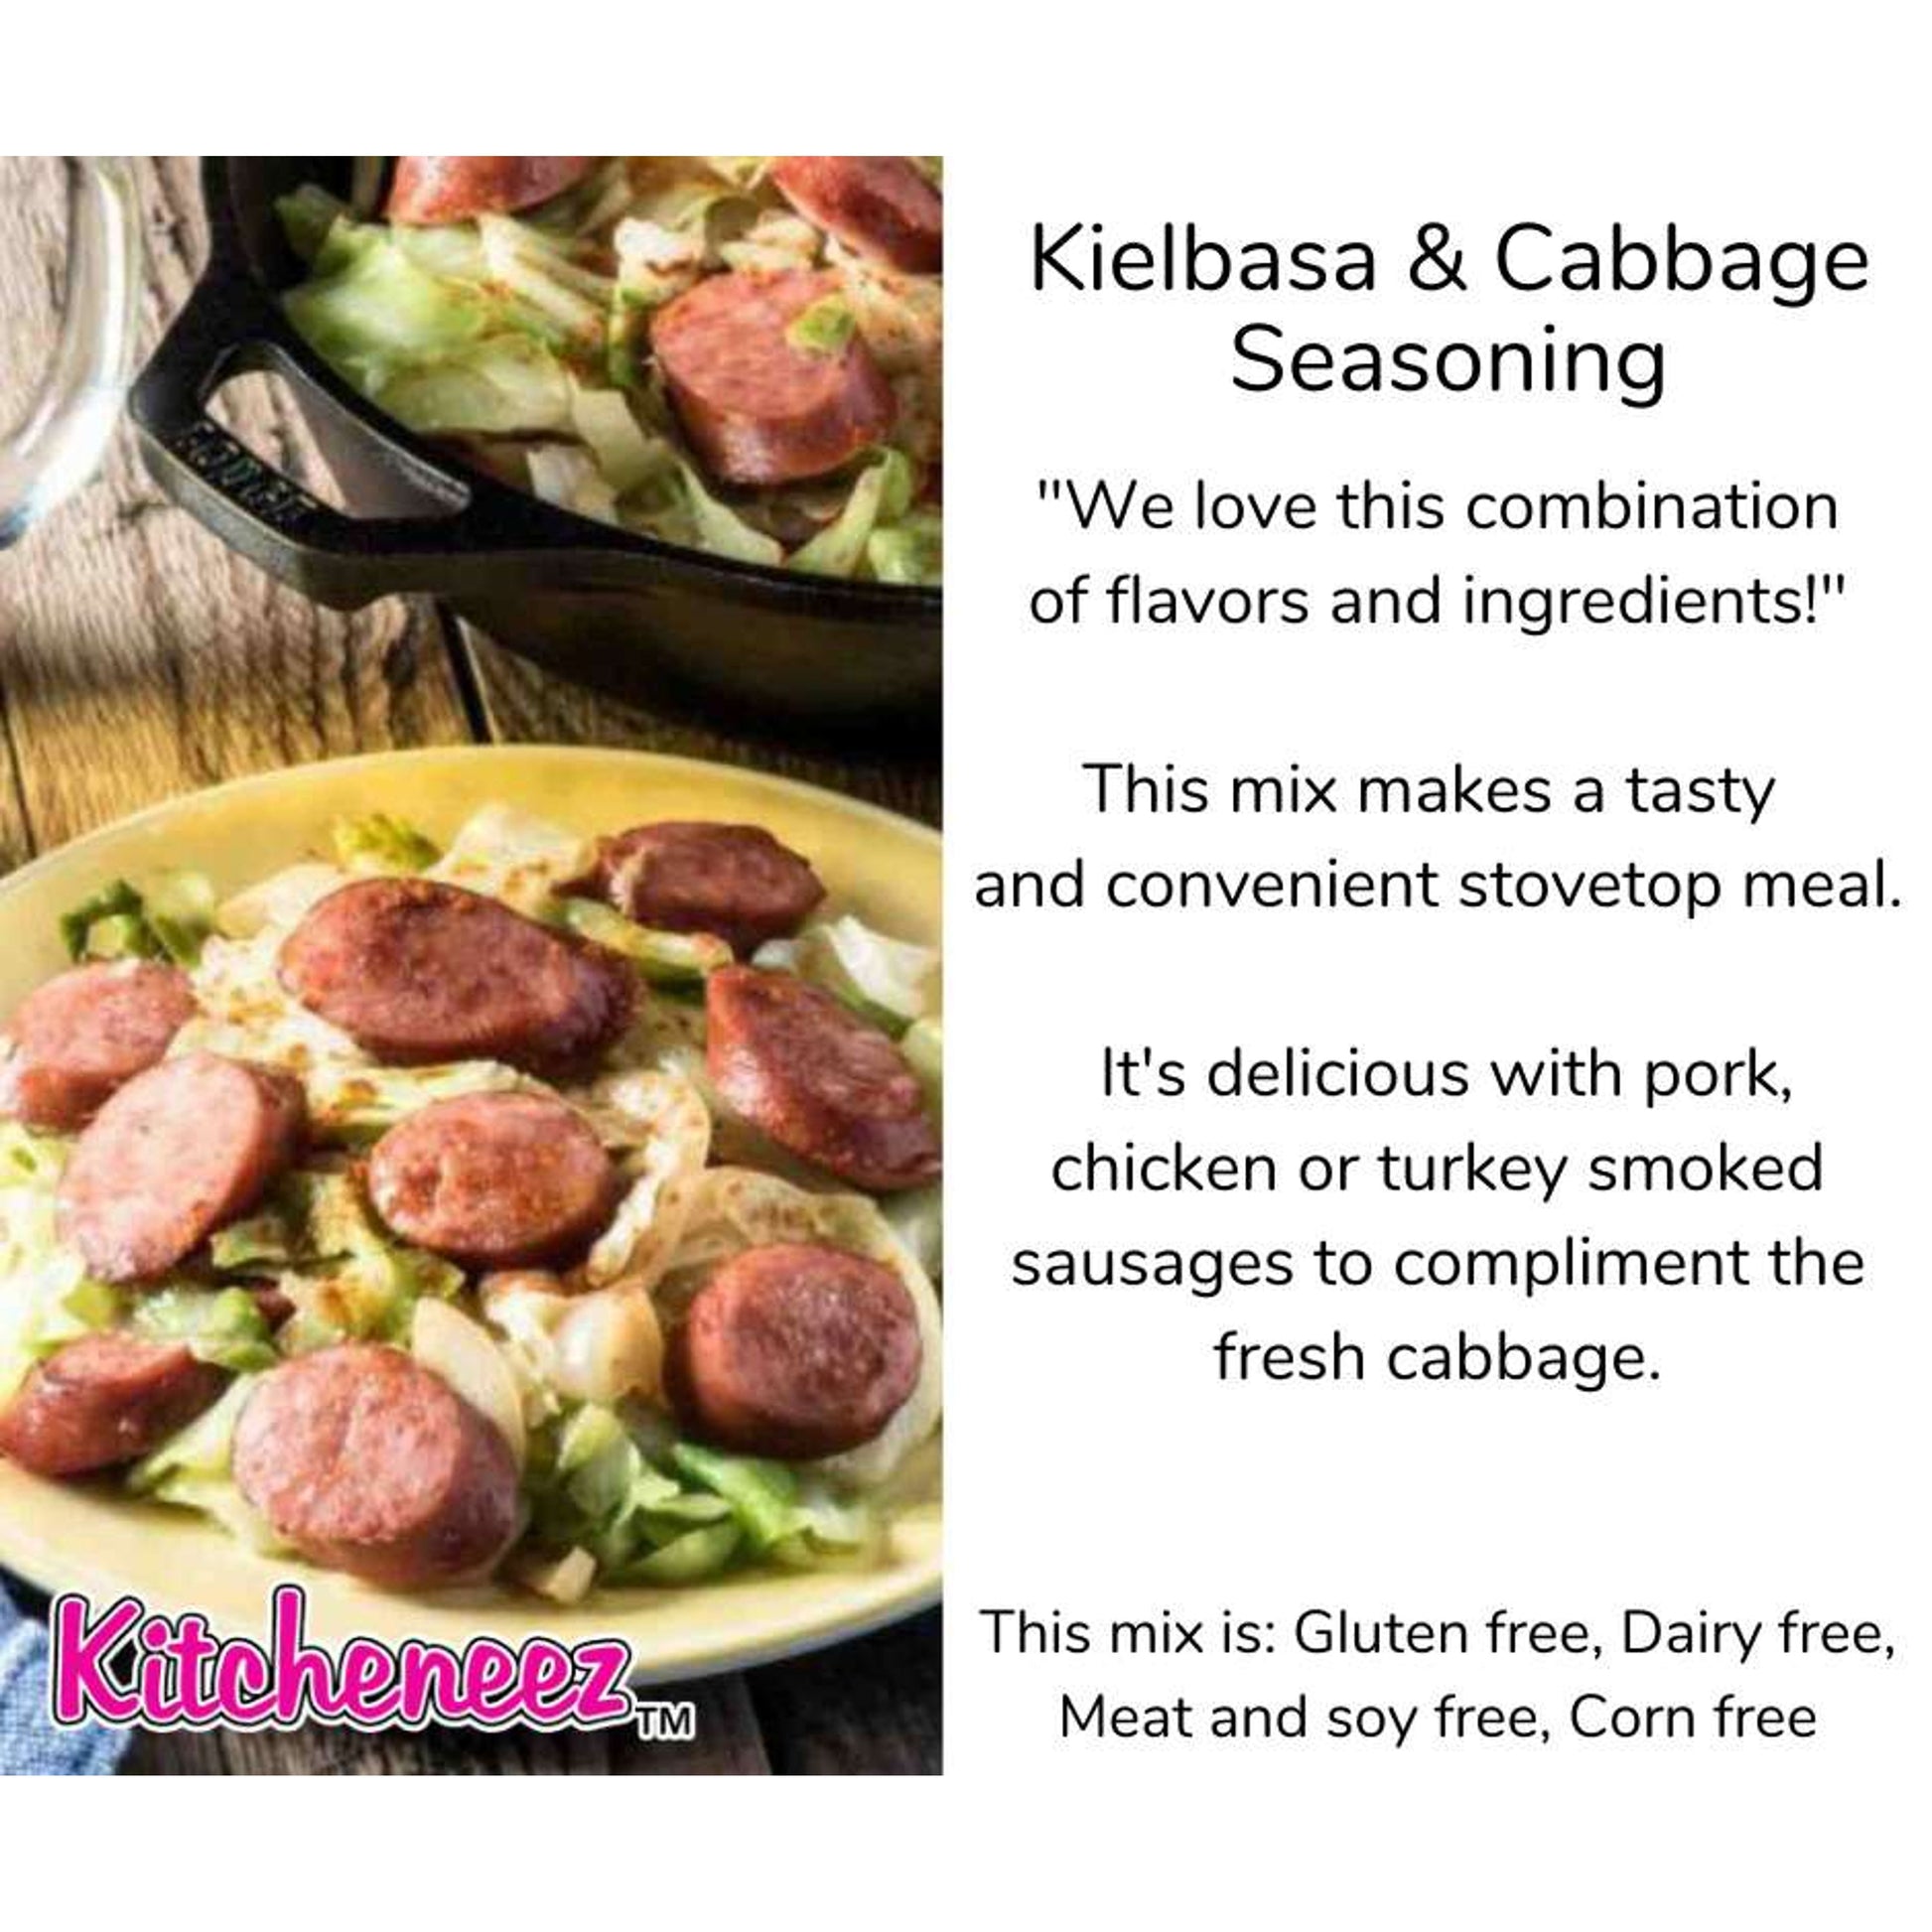 PRE-ORDER Kielbasa & Cabbage Seasoning - Kitcheneez Mixes & More!